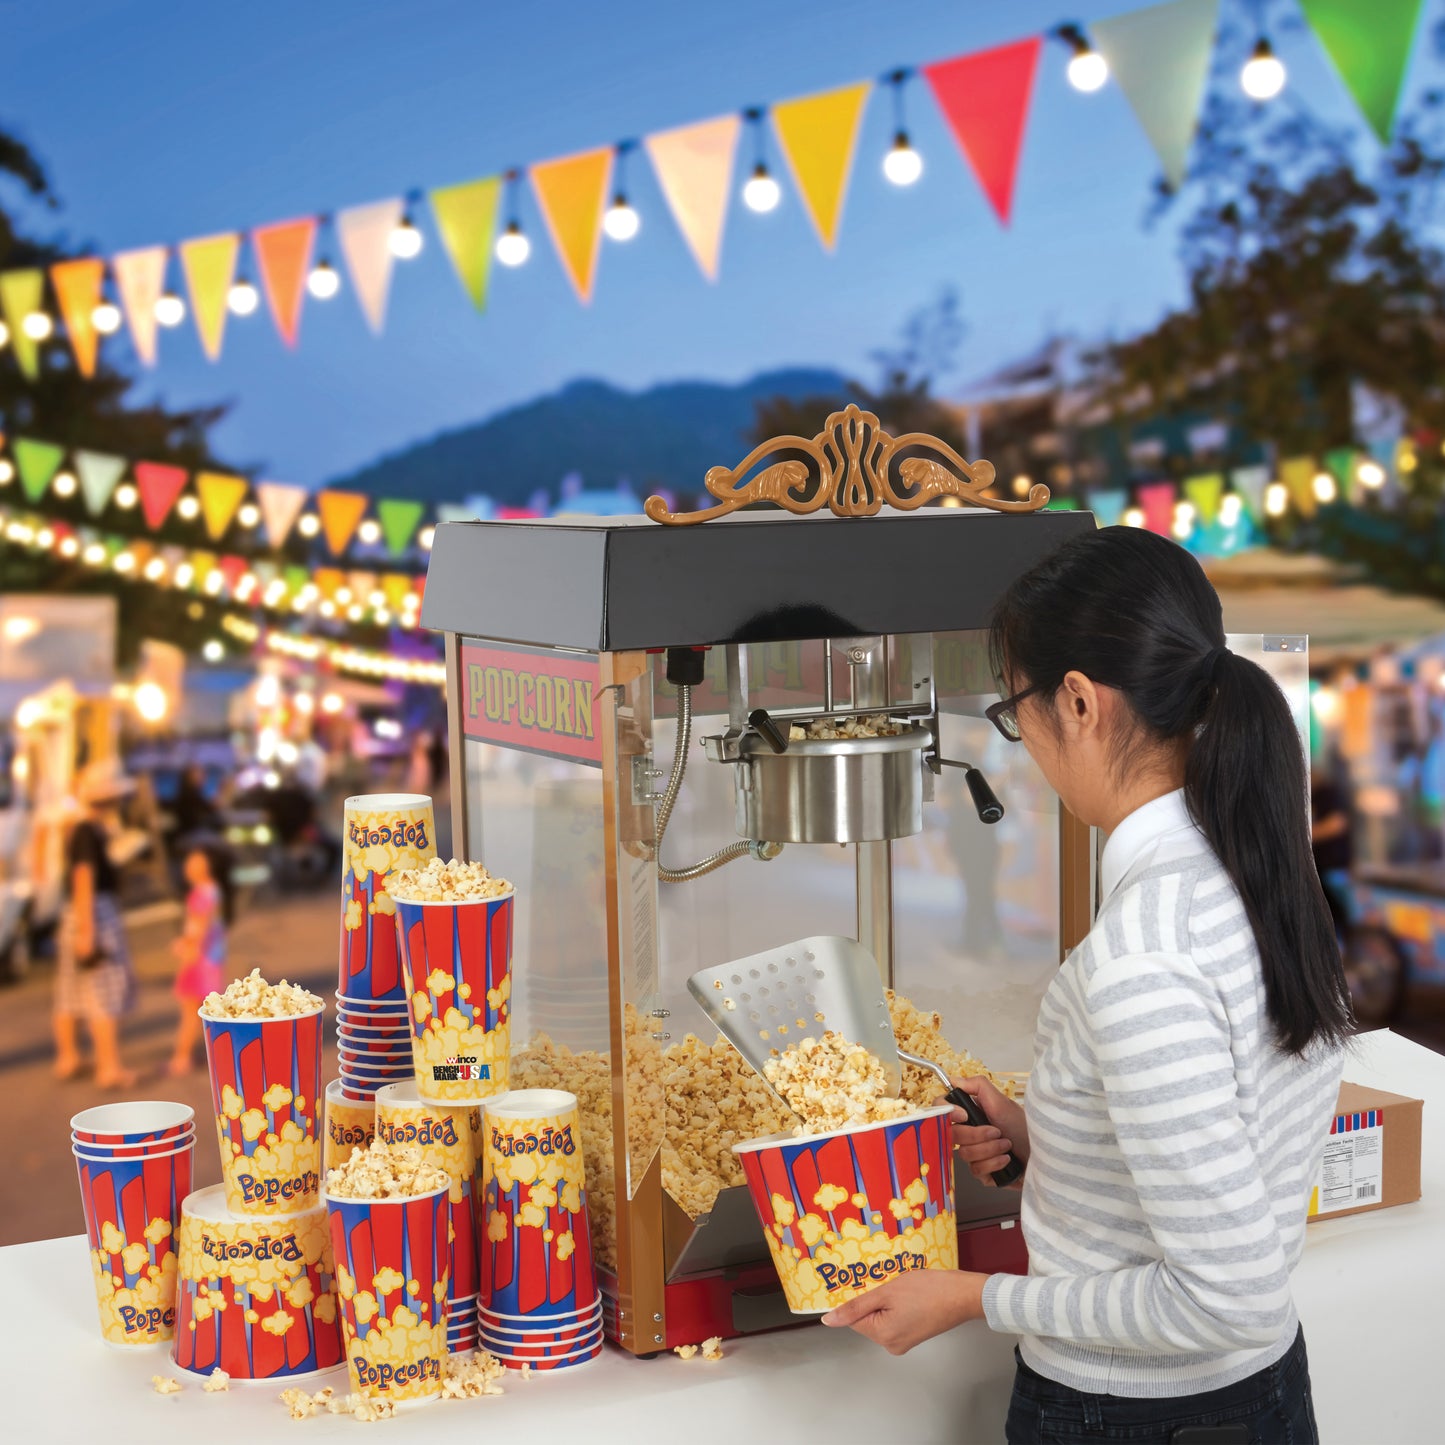 BenchmarkUSA Street Vendor Popcorn Machine - 4 oz